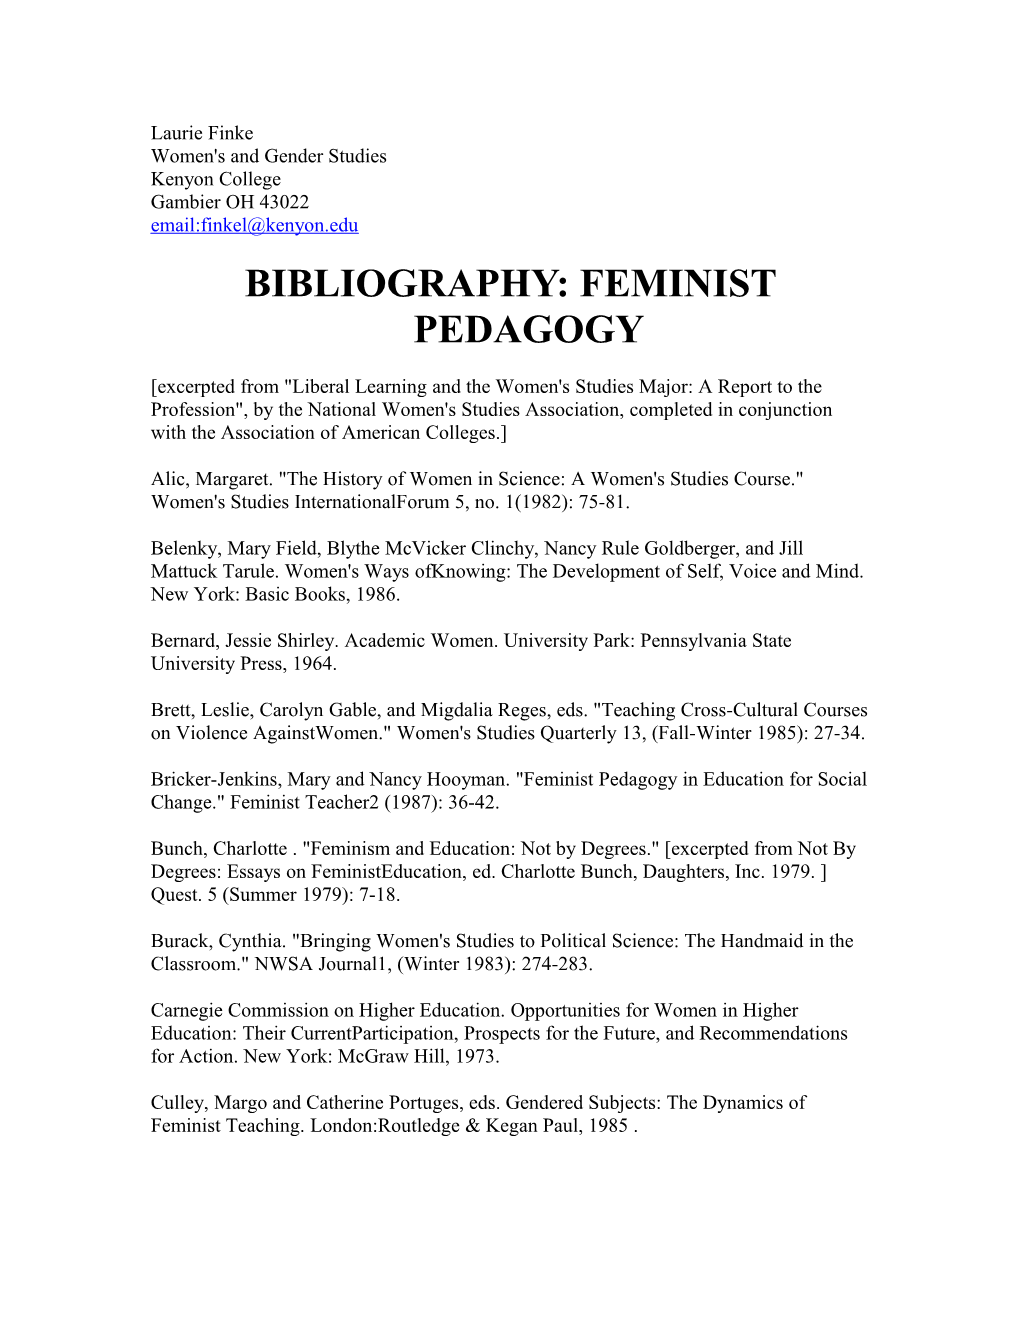 Bibliography: Feminist Pedagogy